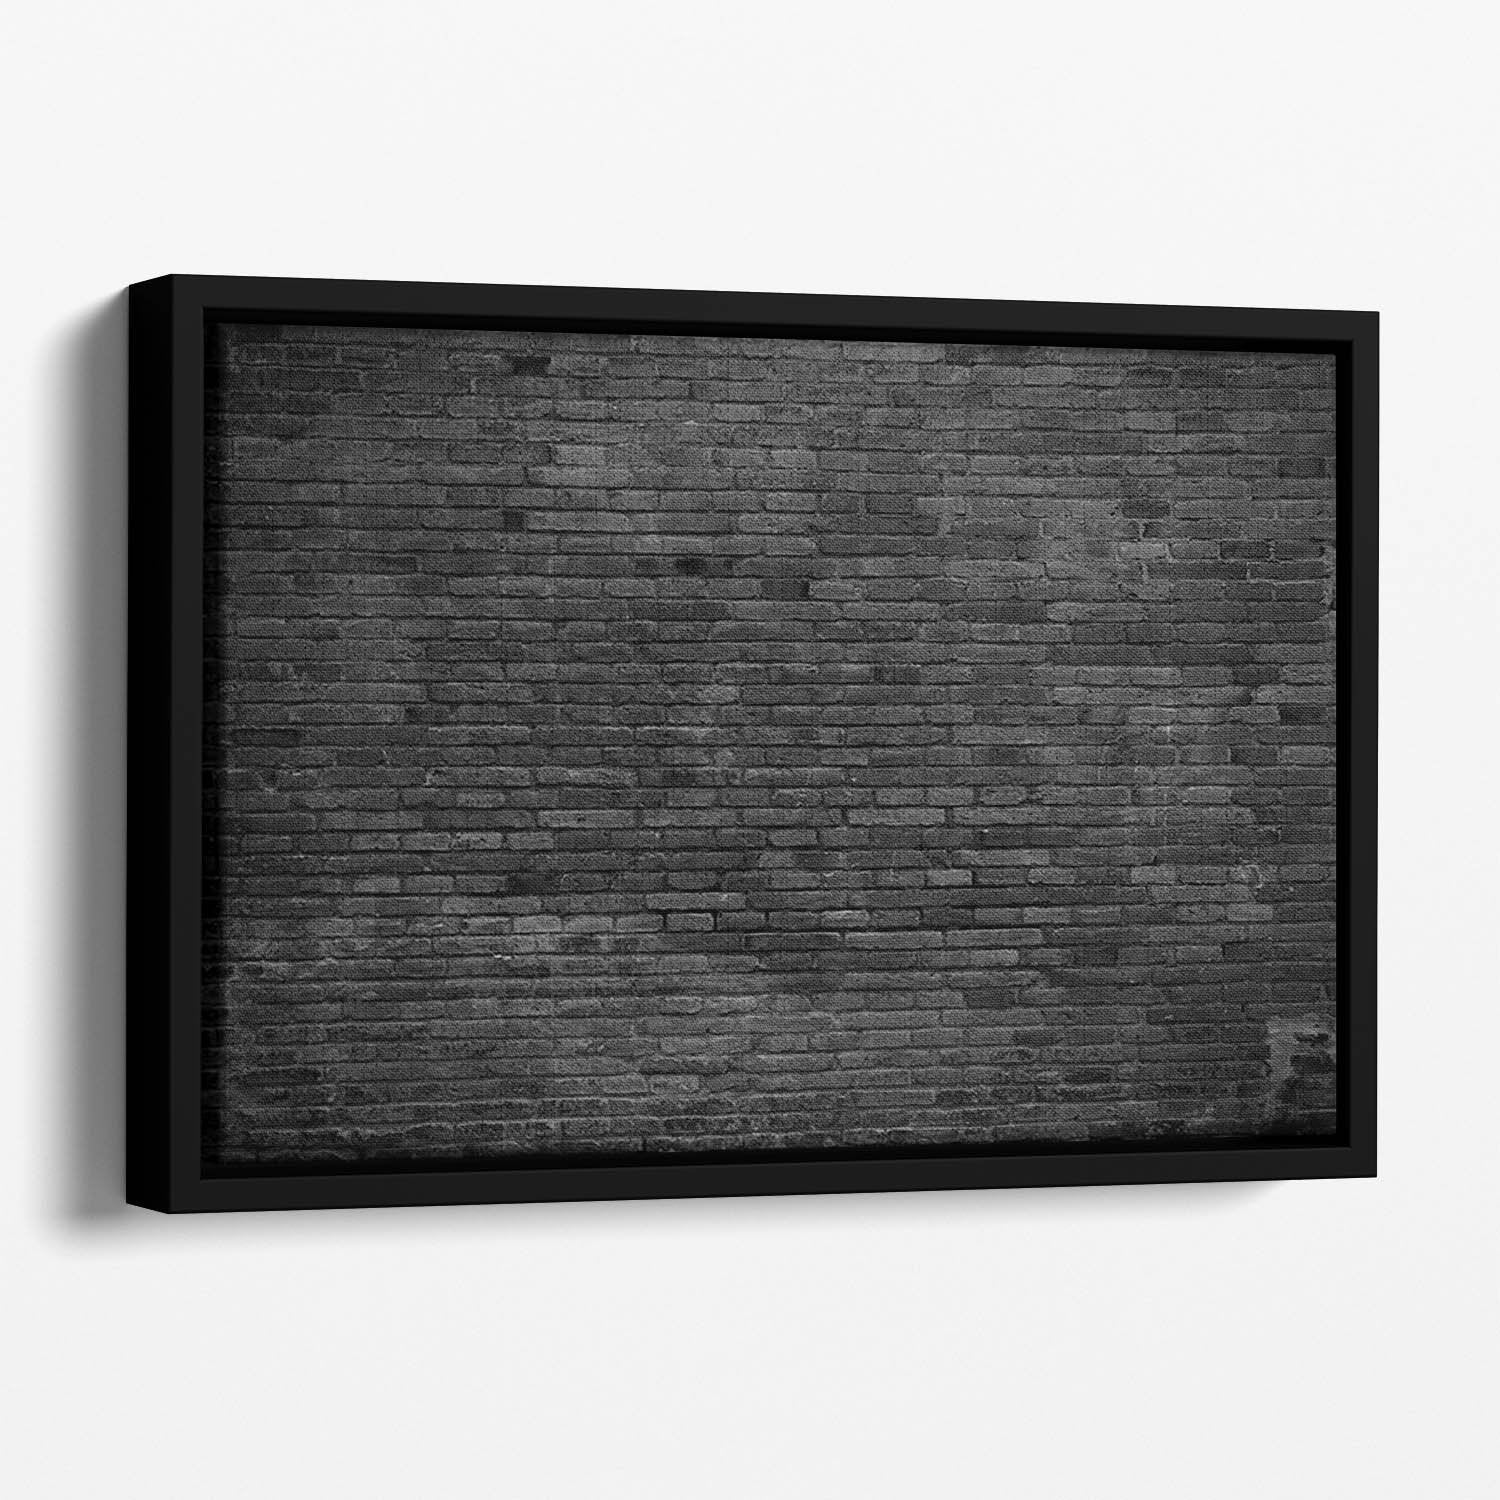 Part of black painted brick Floating Framed Canvas